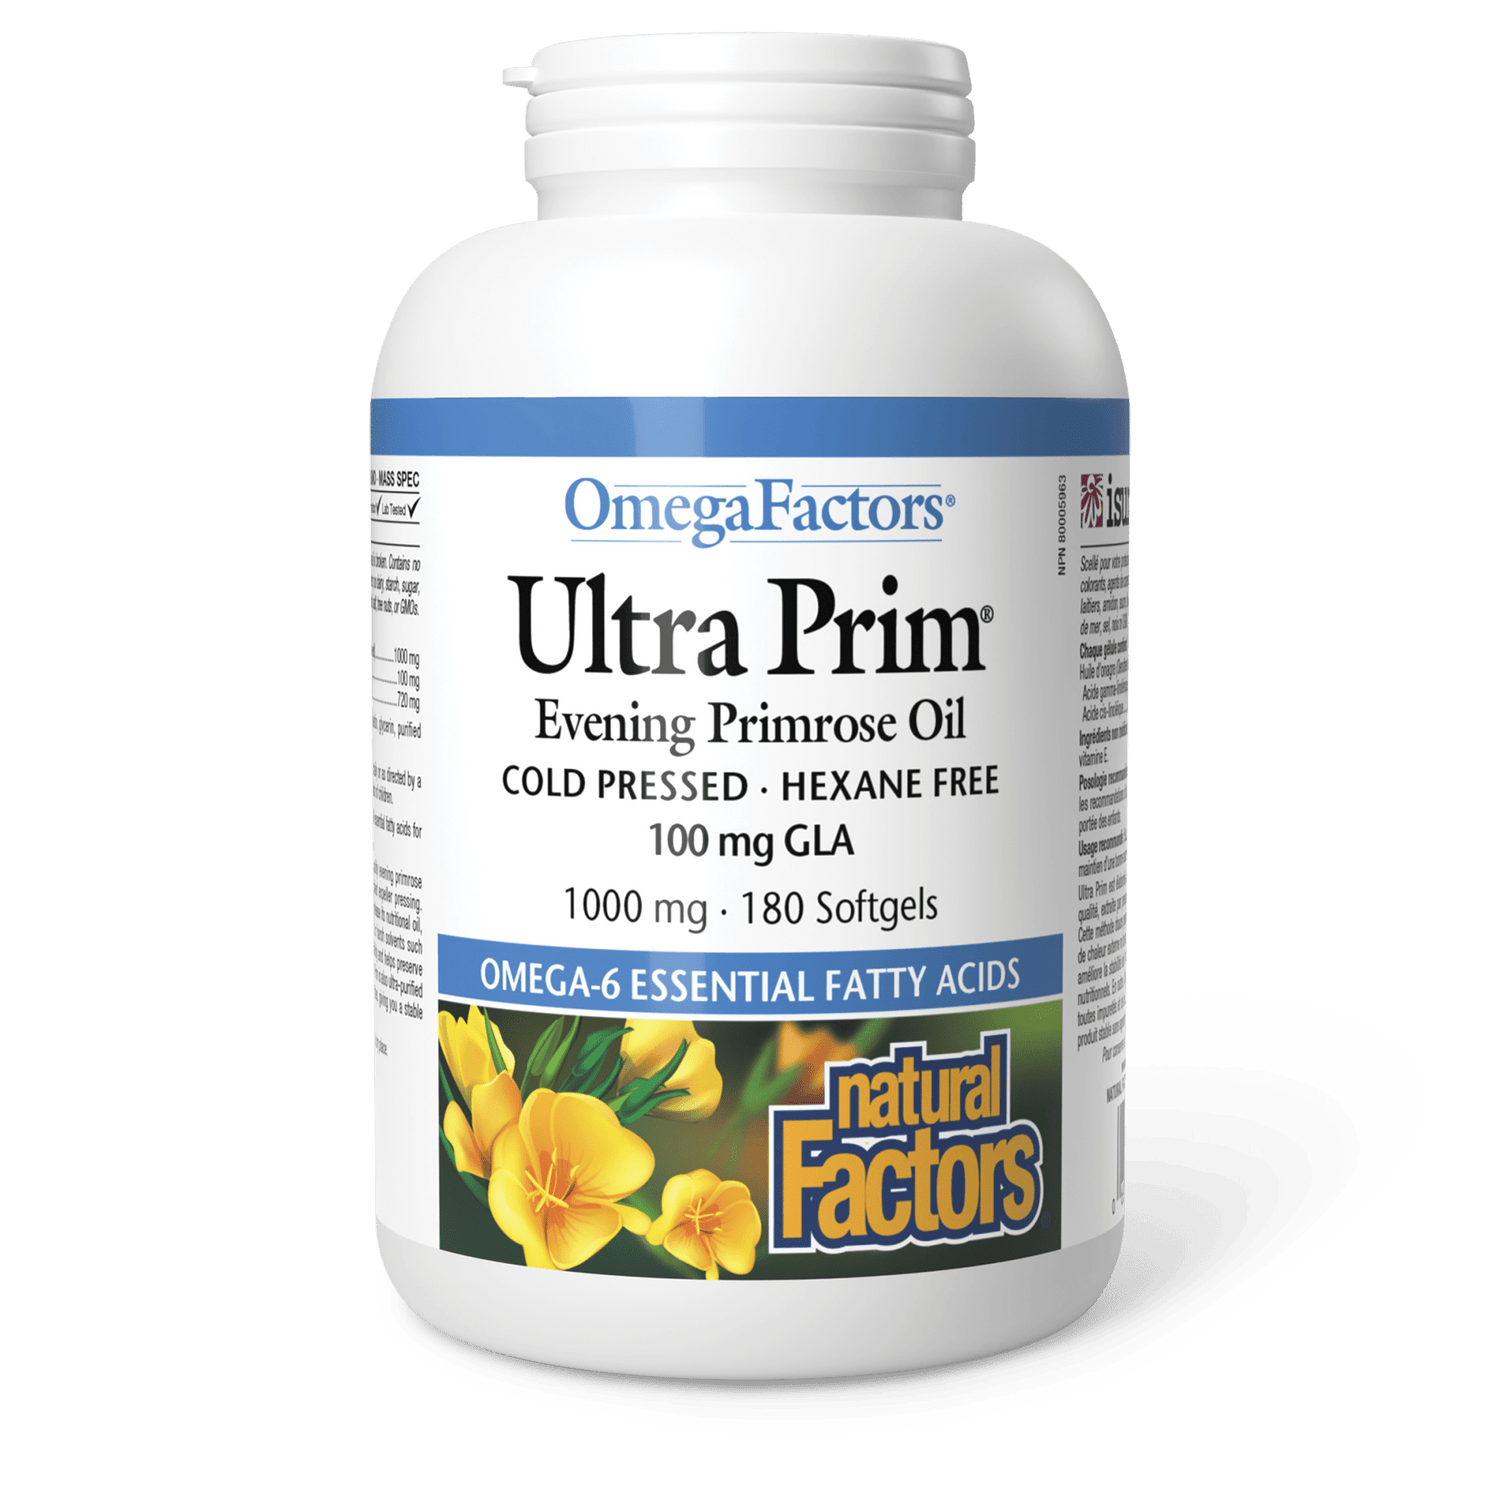 Ultra Prim Evening Primrose Oil 1000 mg, OmegaFactors, Natural Factors|v|image|2347